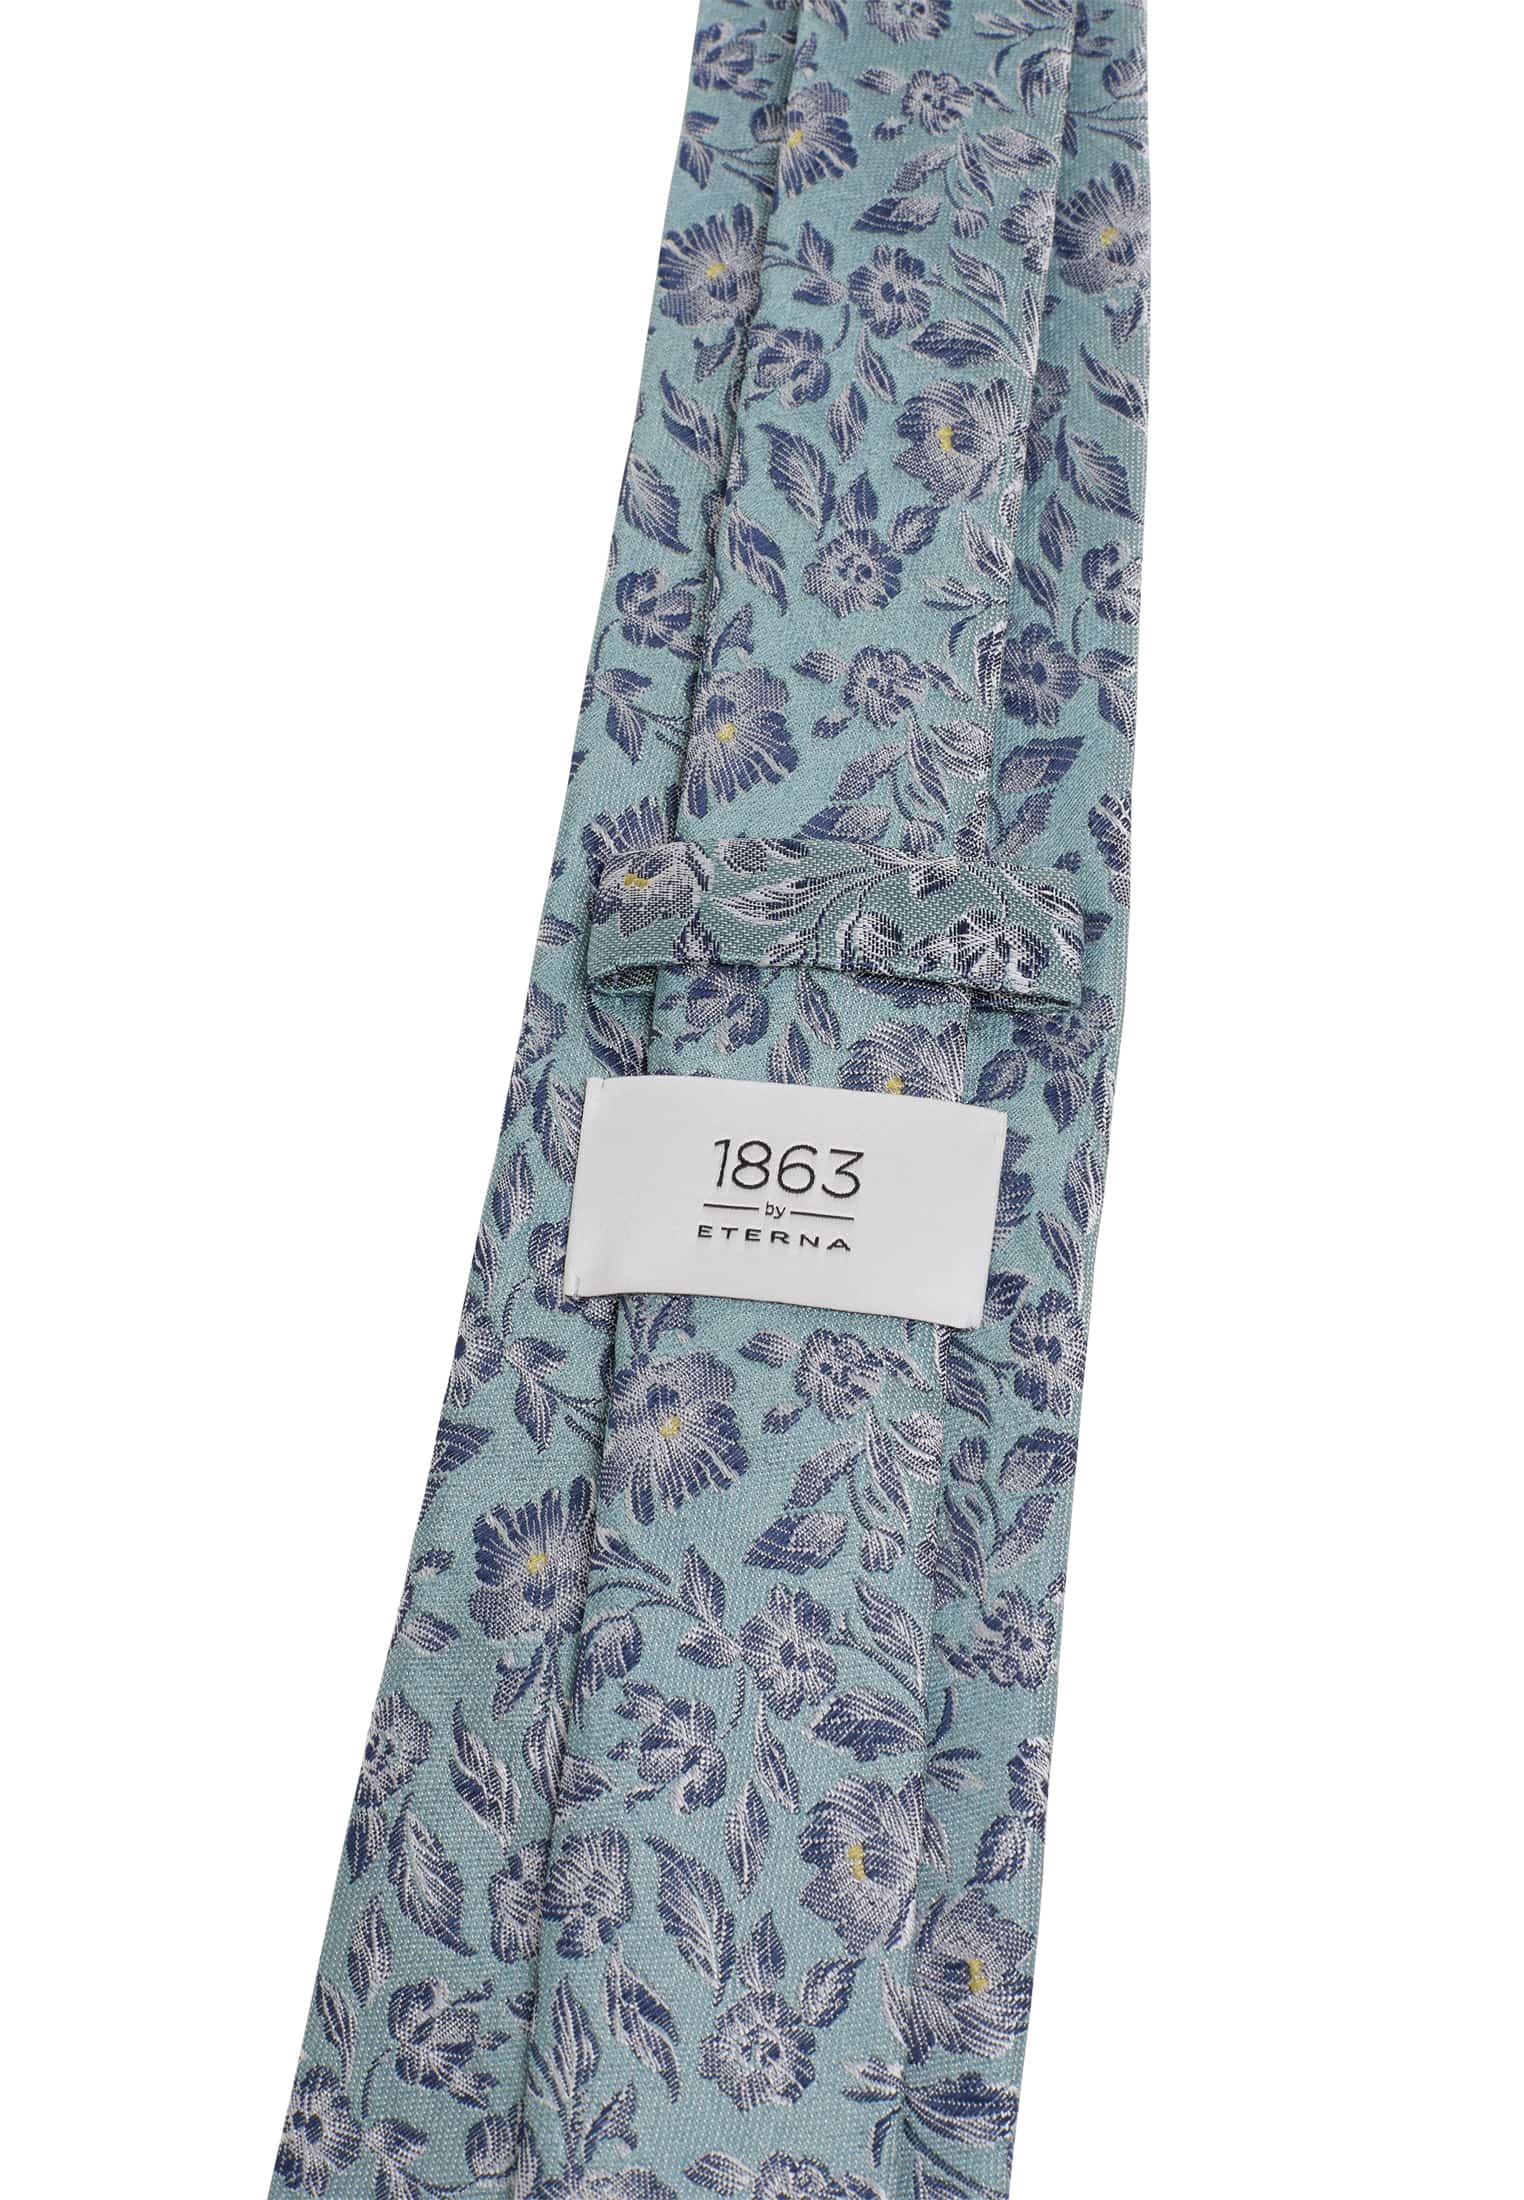 Krawatte in blau/navy gemustert | blau/navy | 142 | 1AC02003-81-43-142 | Breite Krawatten